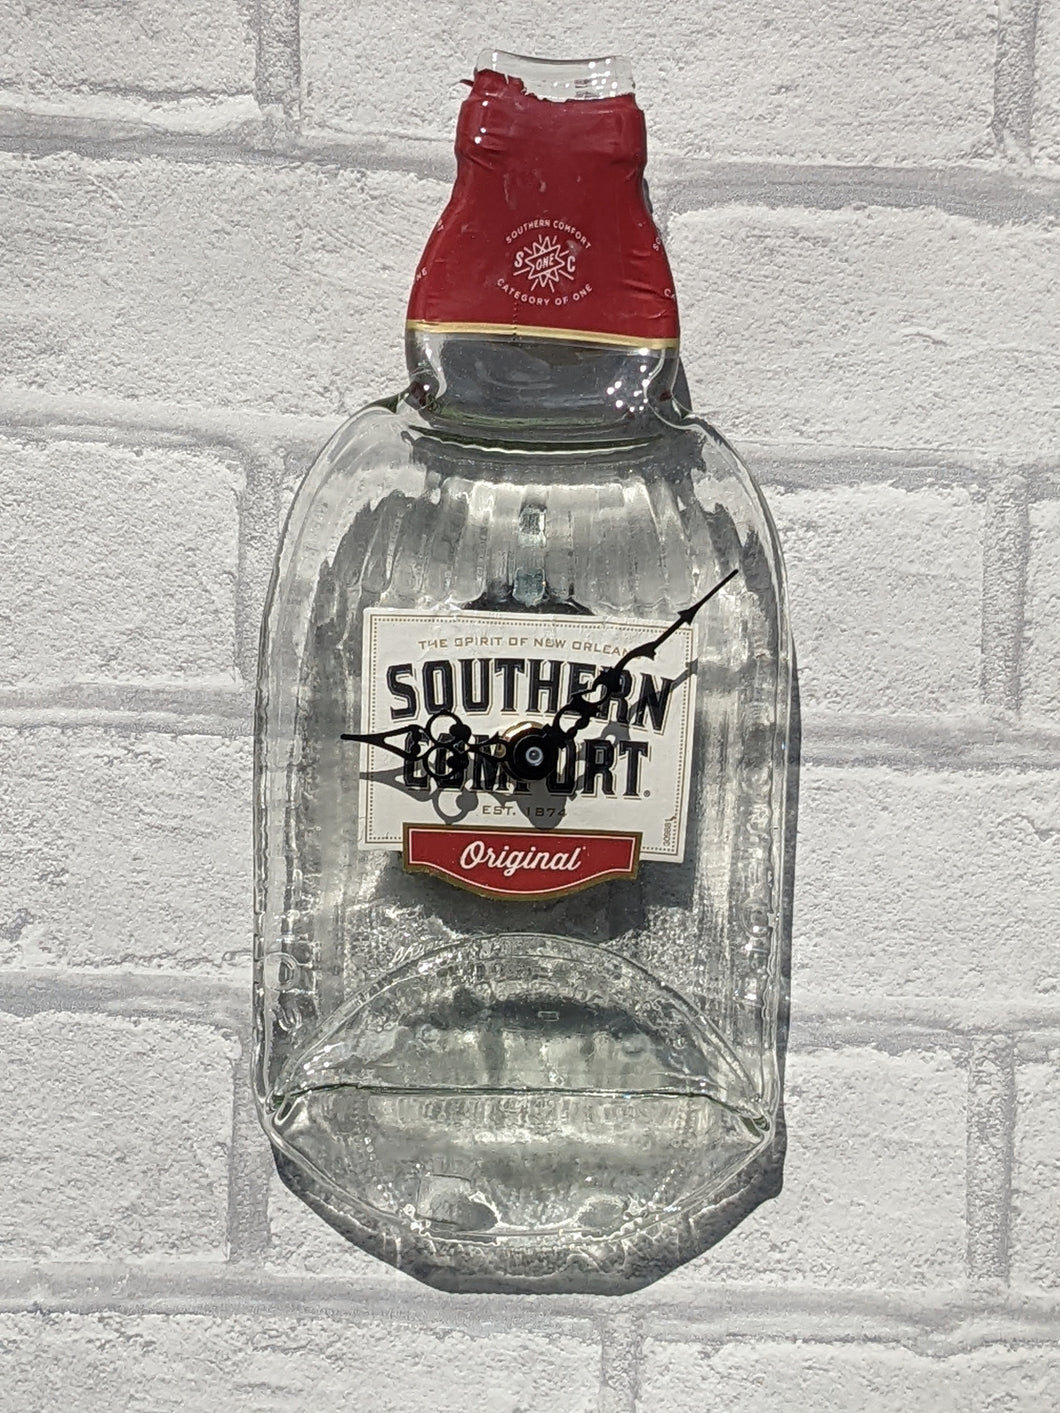 Southern Comfort bottle clock